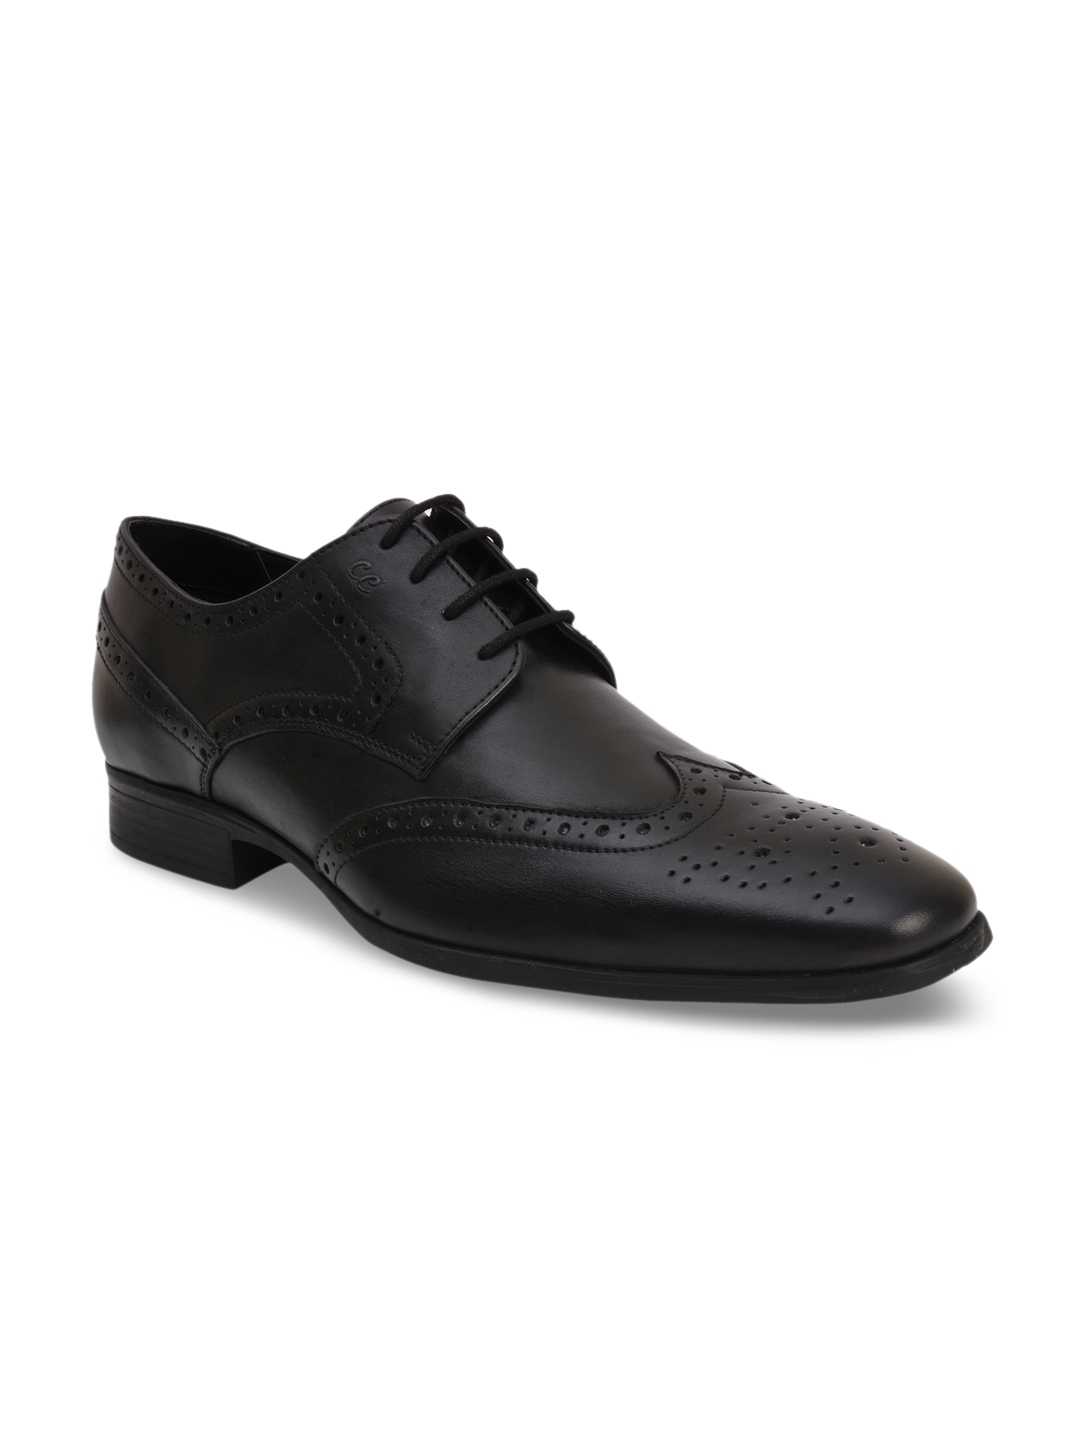 Buy CORE ESPANA Men Black Leather Brogues - Formal Shoes for Men ...